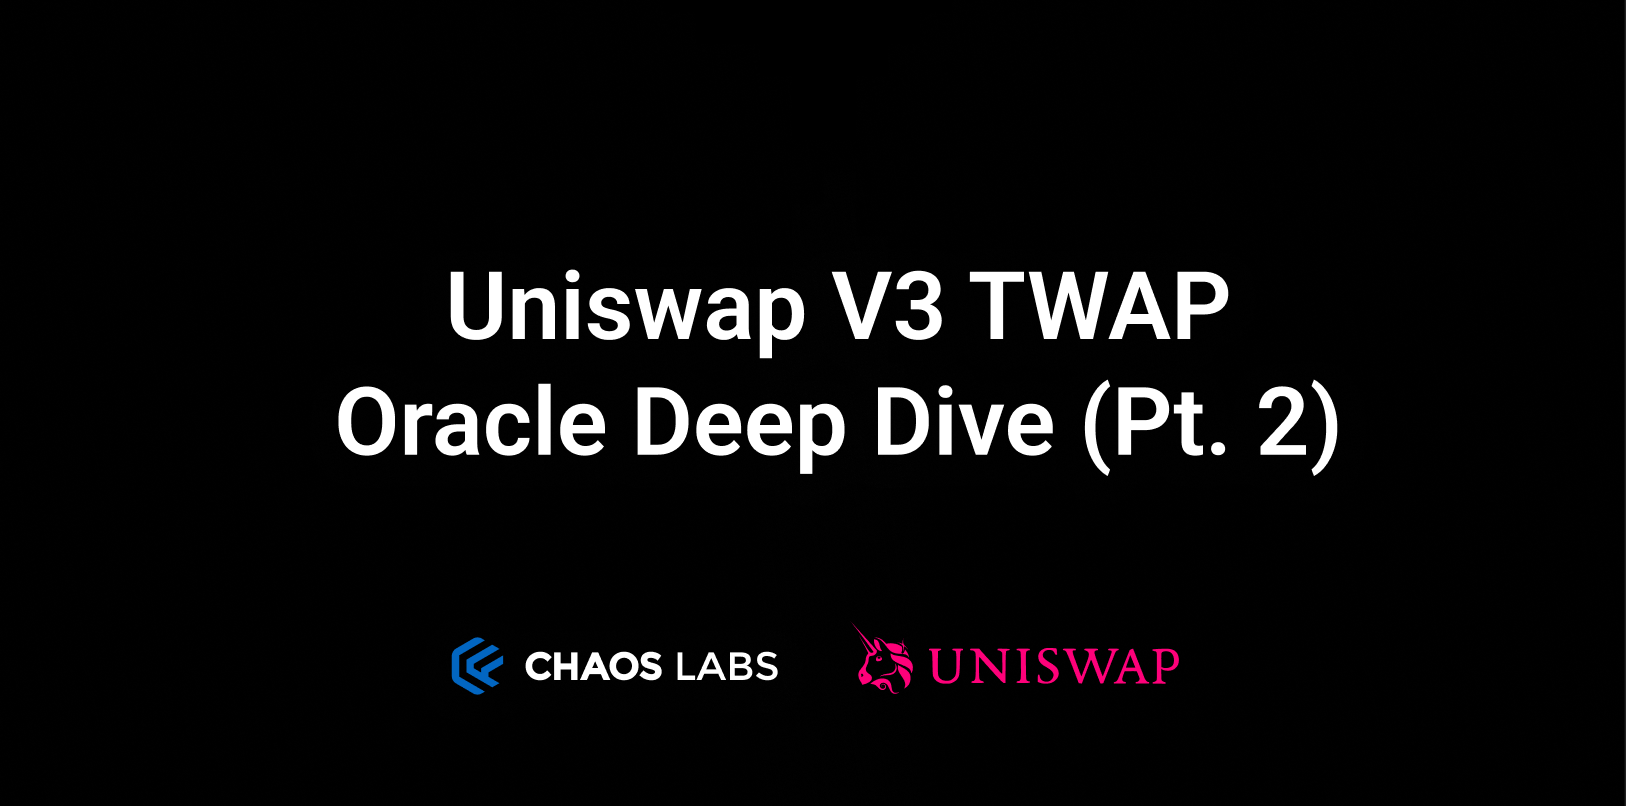 Cover Image for Uniswap V3 TWAP Oracle Deep Dive - Pt. 2